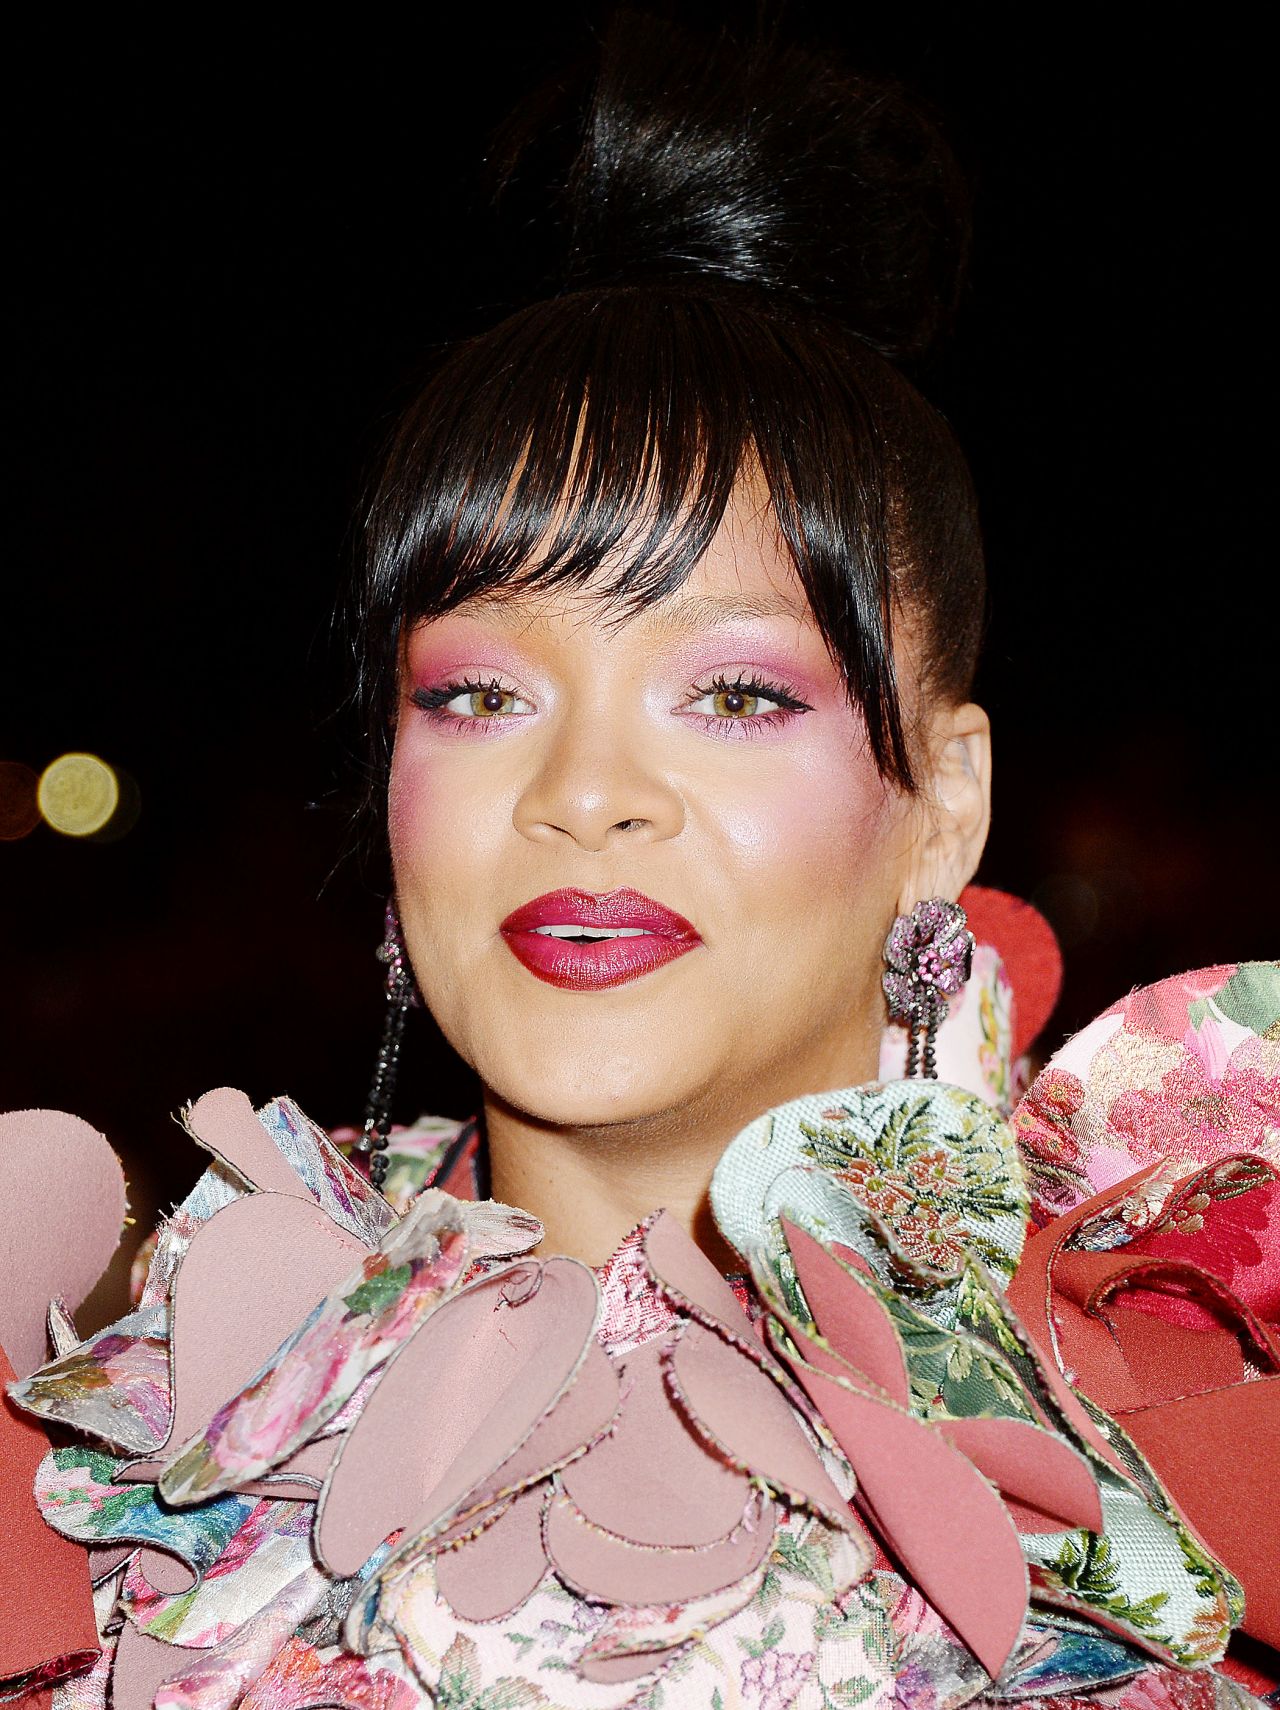 Rihanna at MET Gala in New York 05/01/2017